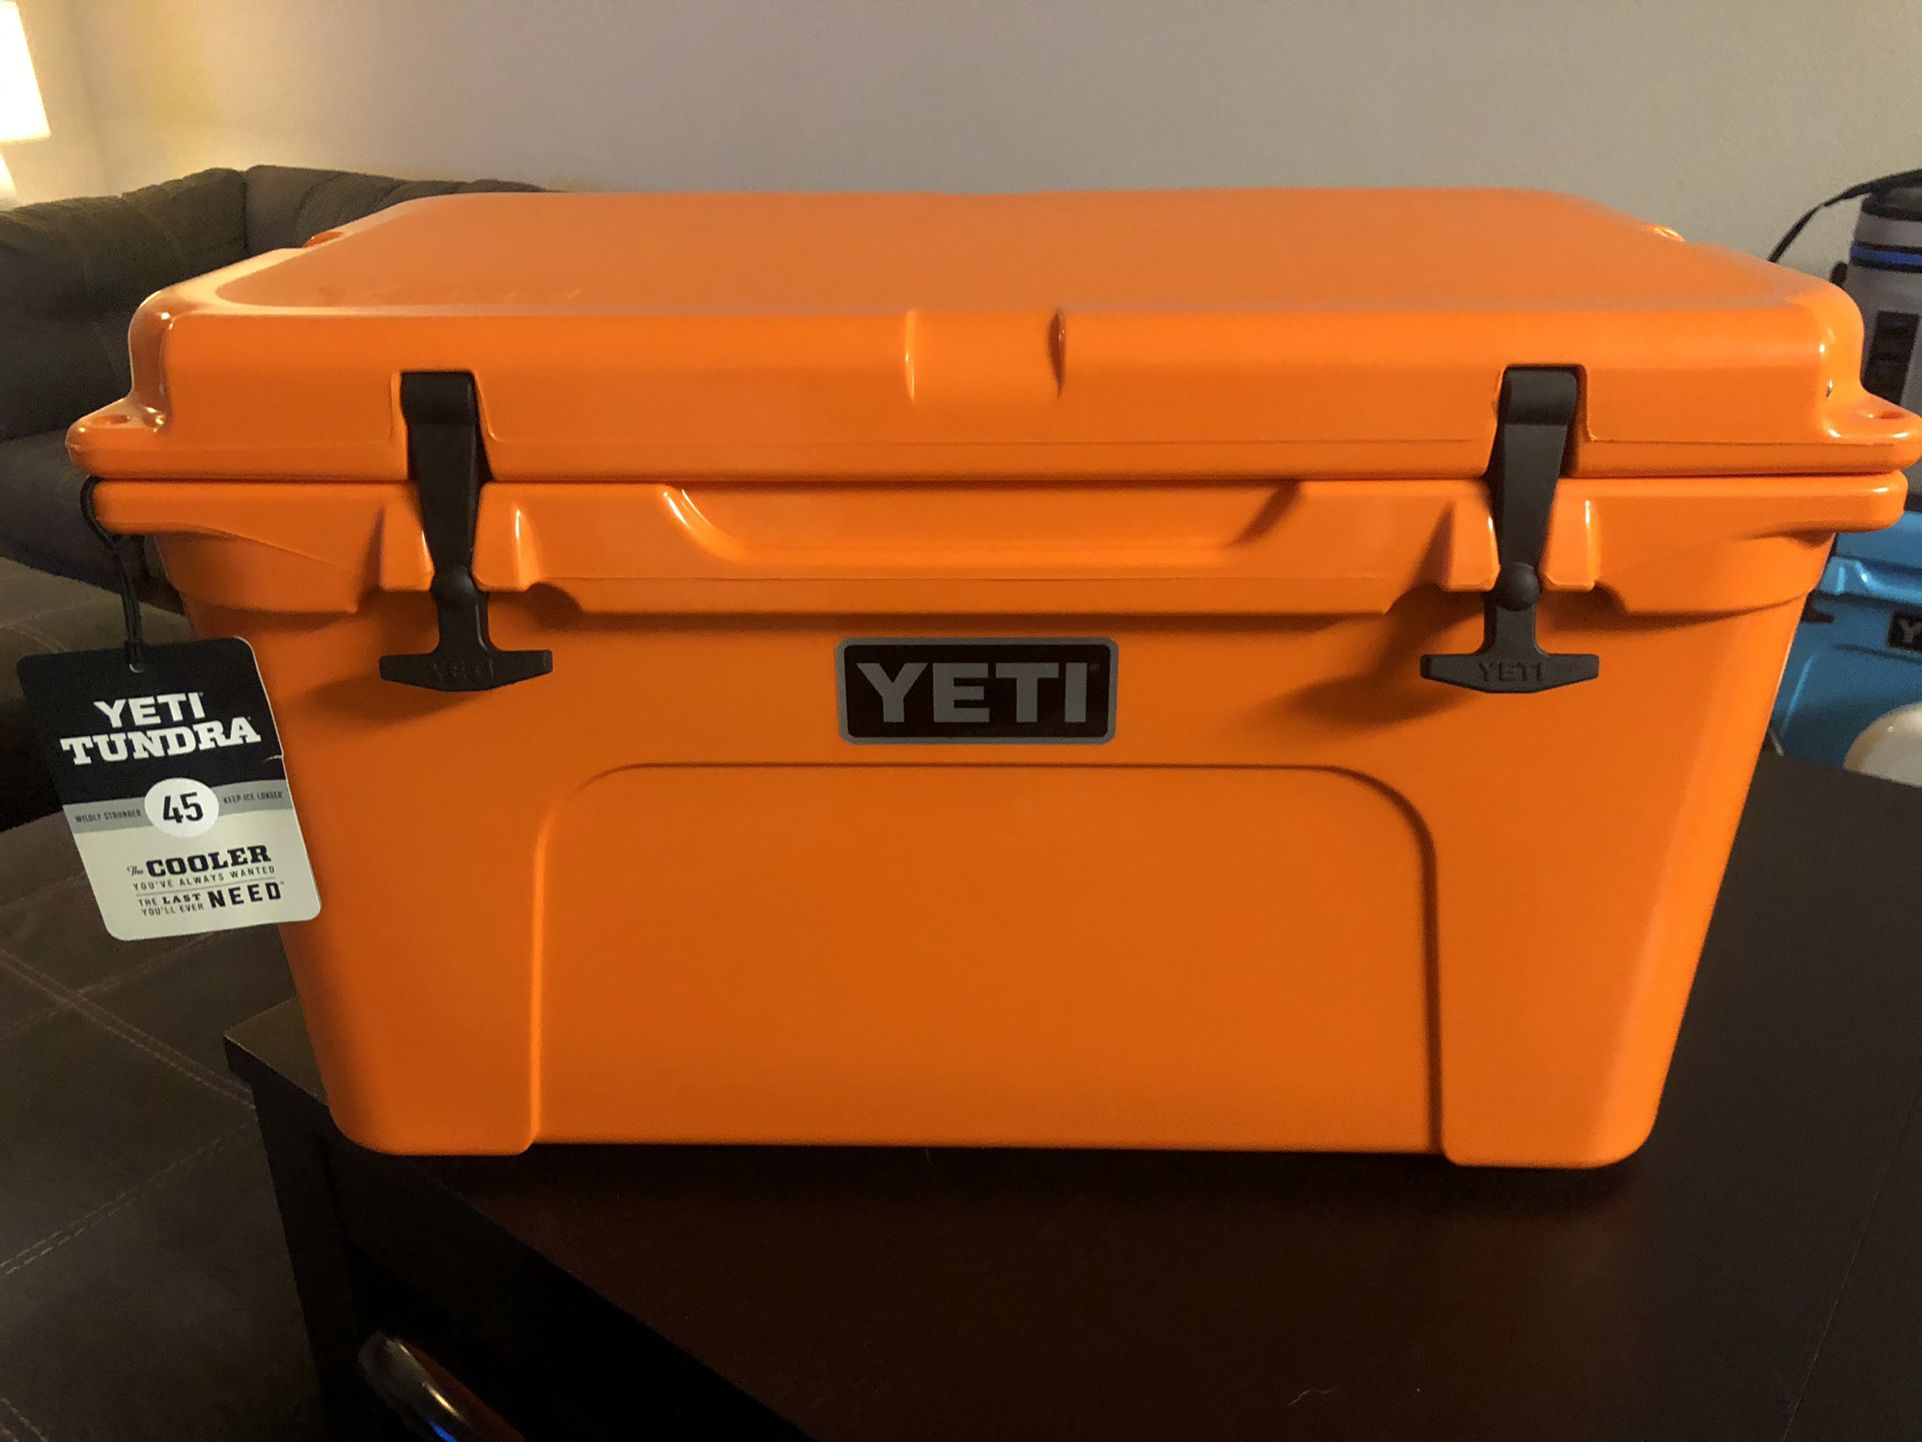 Yeti Roadie King Crab orange Cooler for Sale in Vacaville, CA - OfferUp